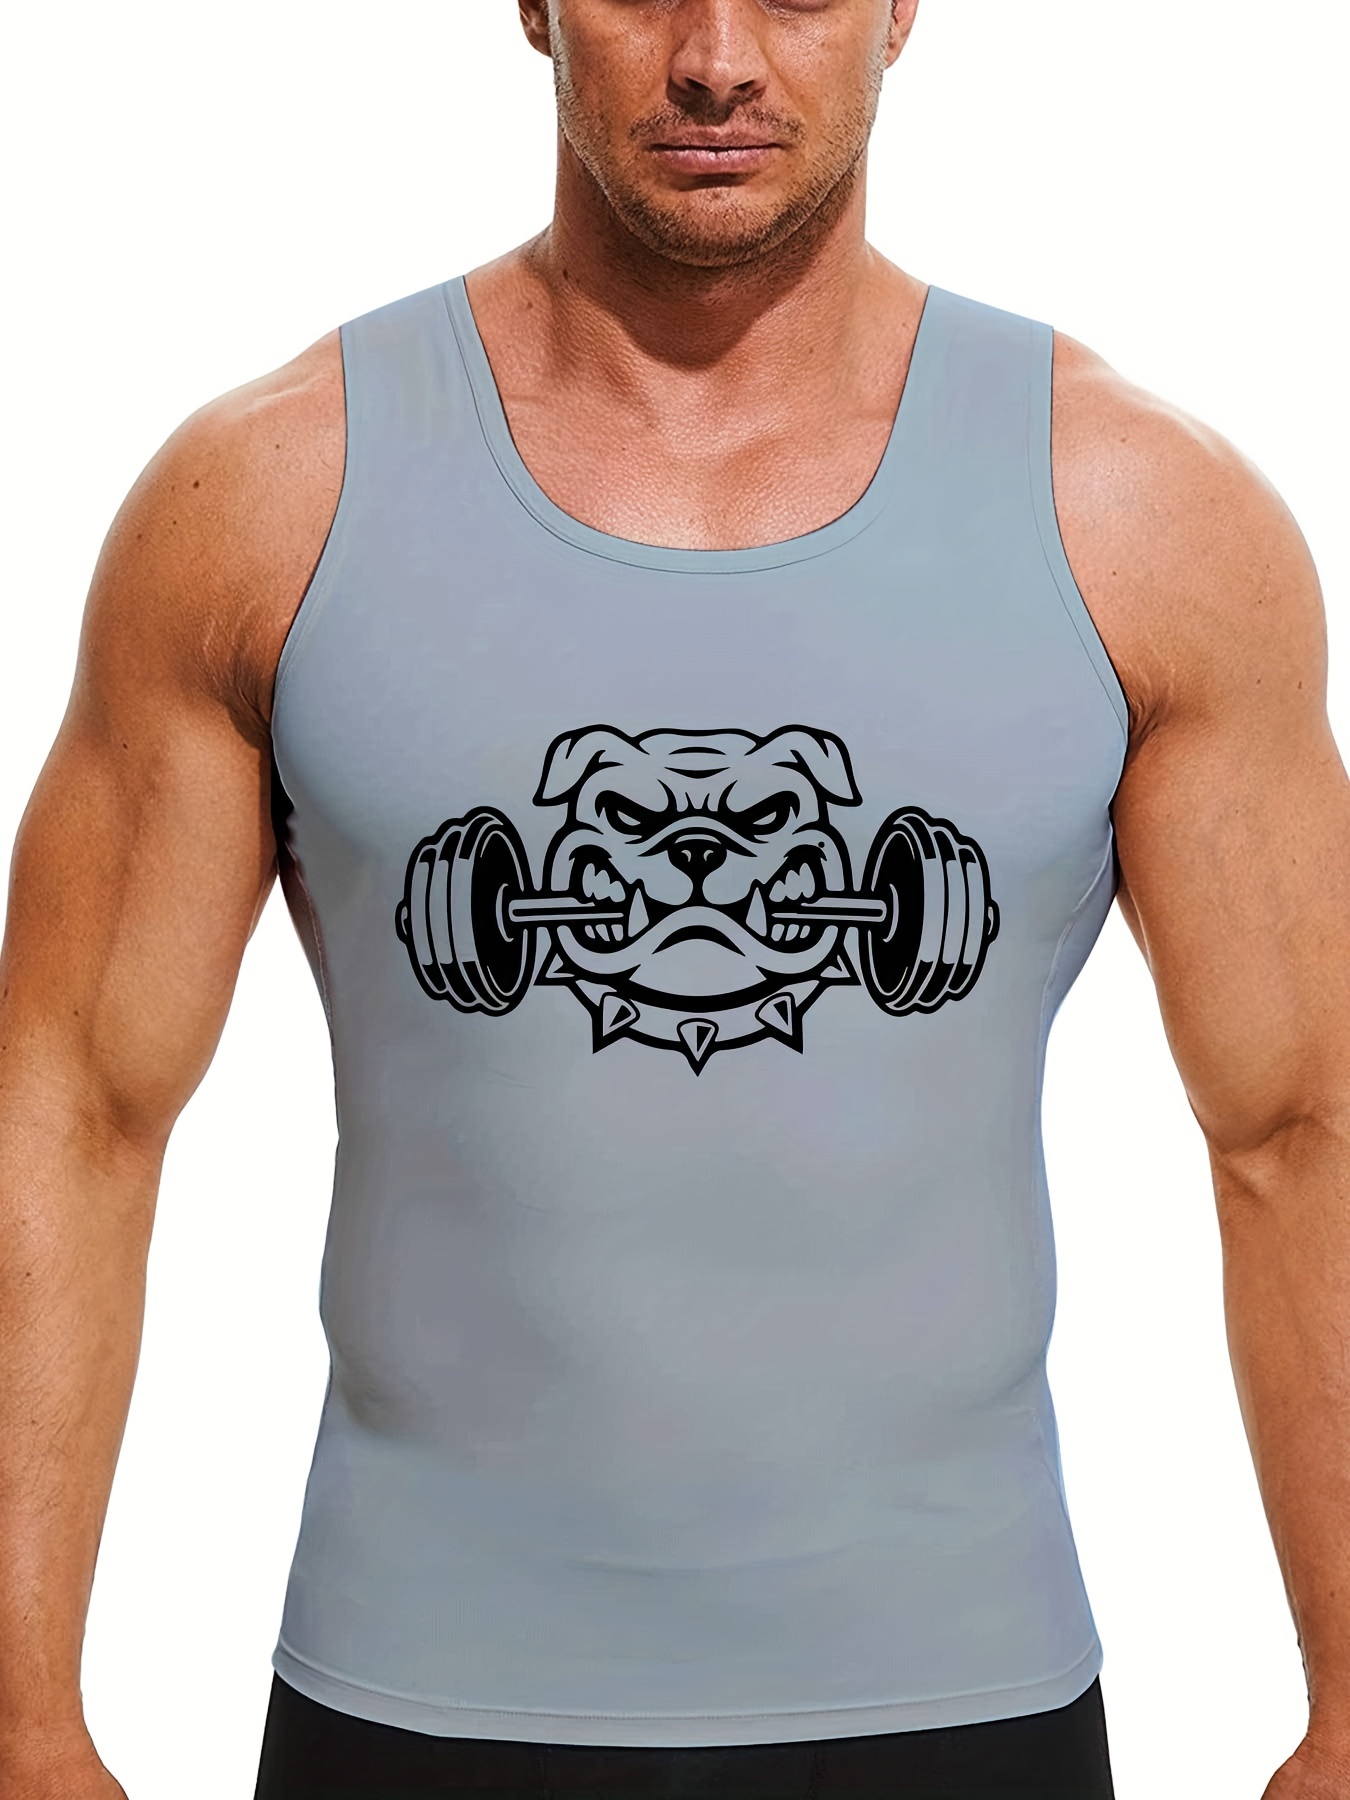 Men's Gym Workout Printed ANIMAL Tank Top VEST Fitness